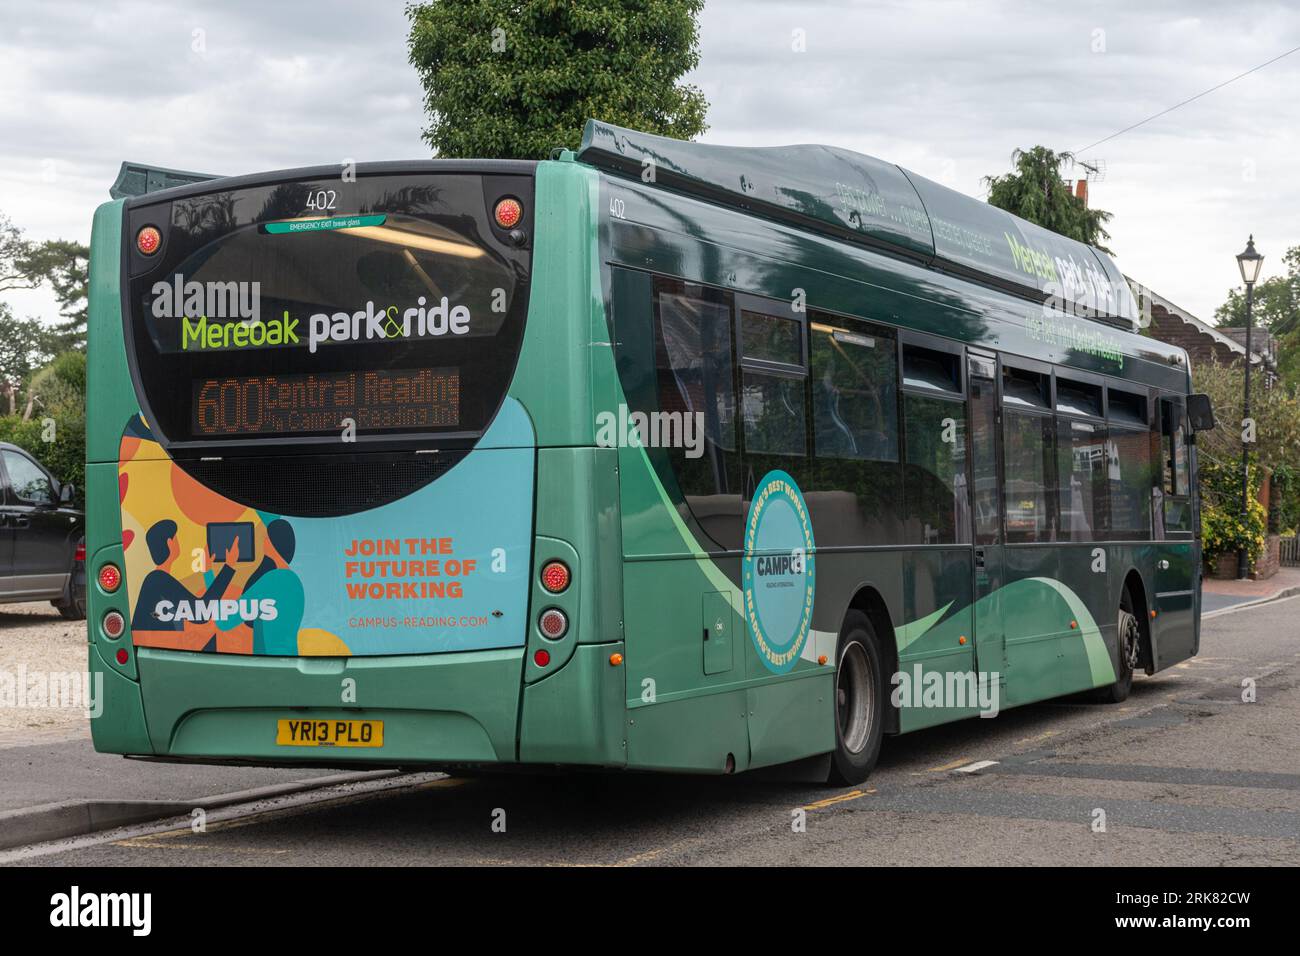 Mereoak Park and Ride Bus, public transport vehicle around Reading, Berkshire, England, UK Stock Photo